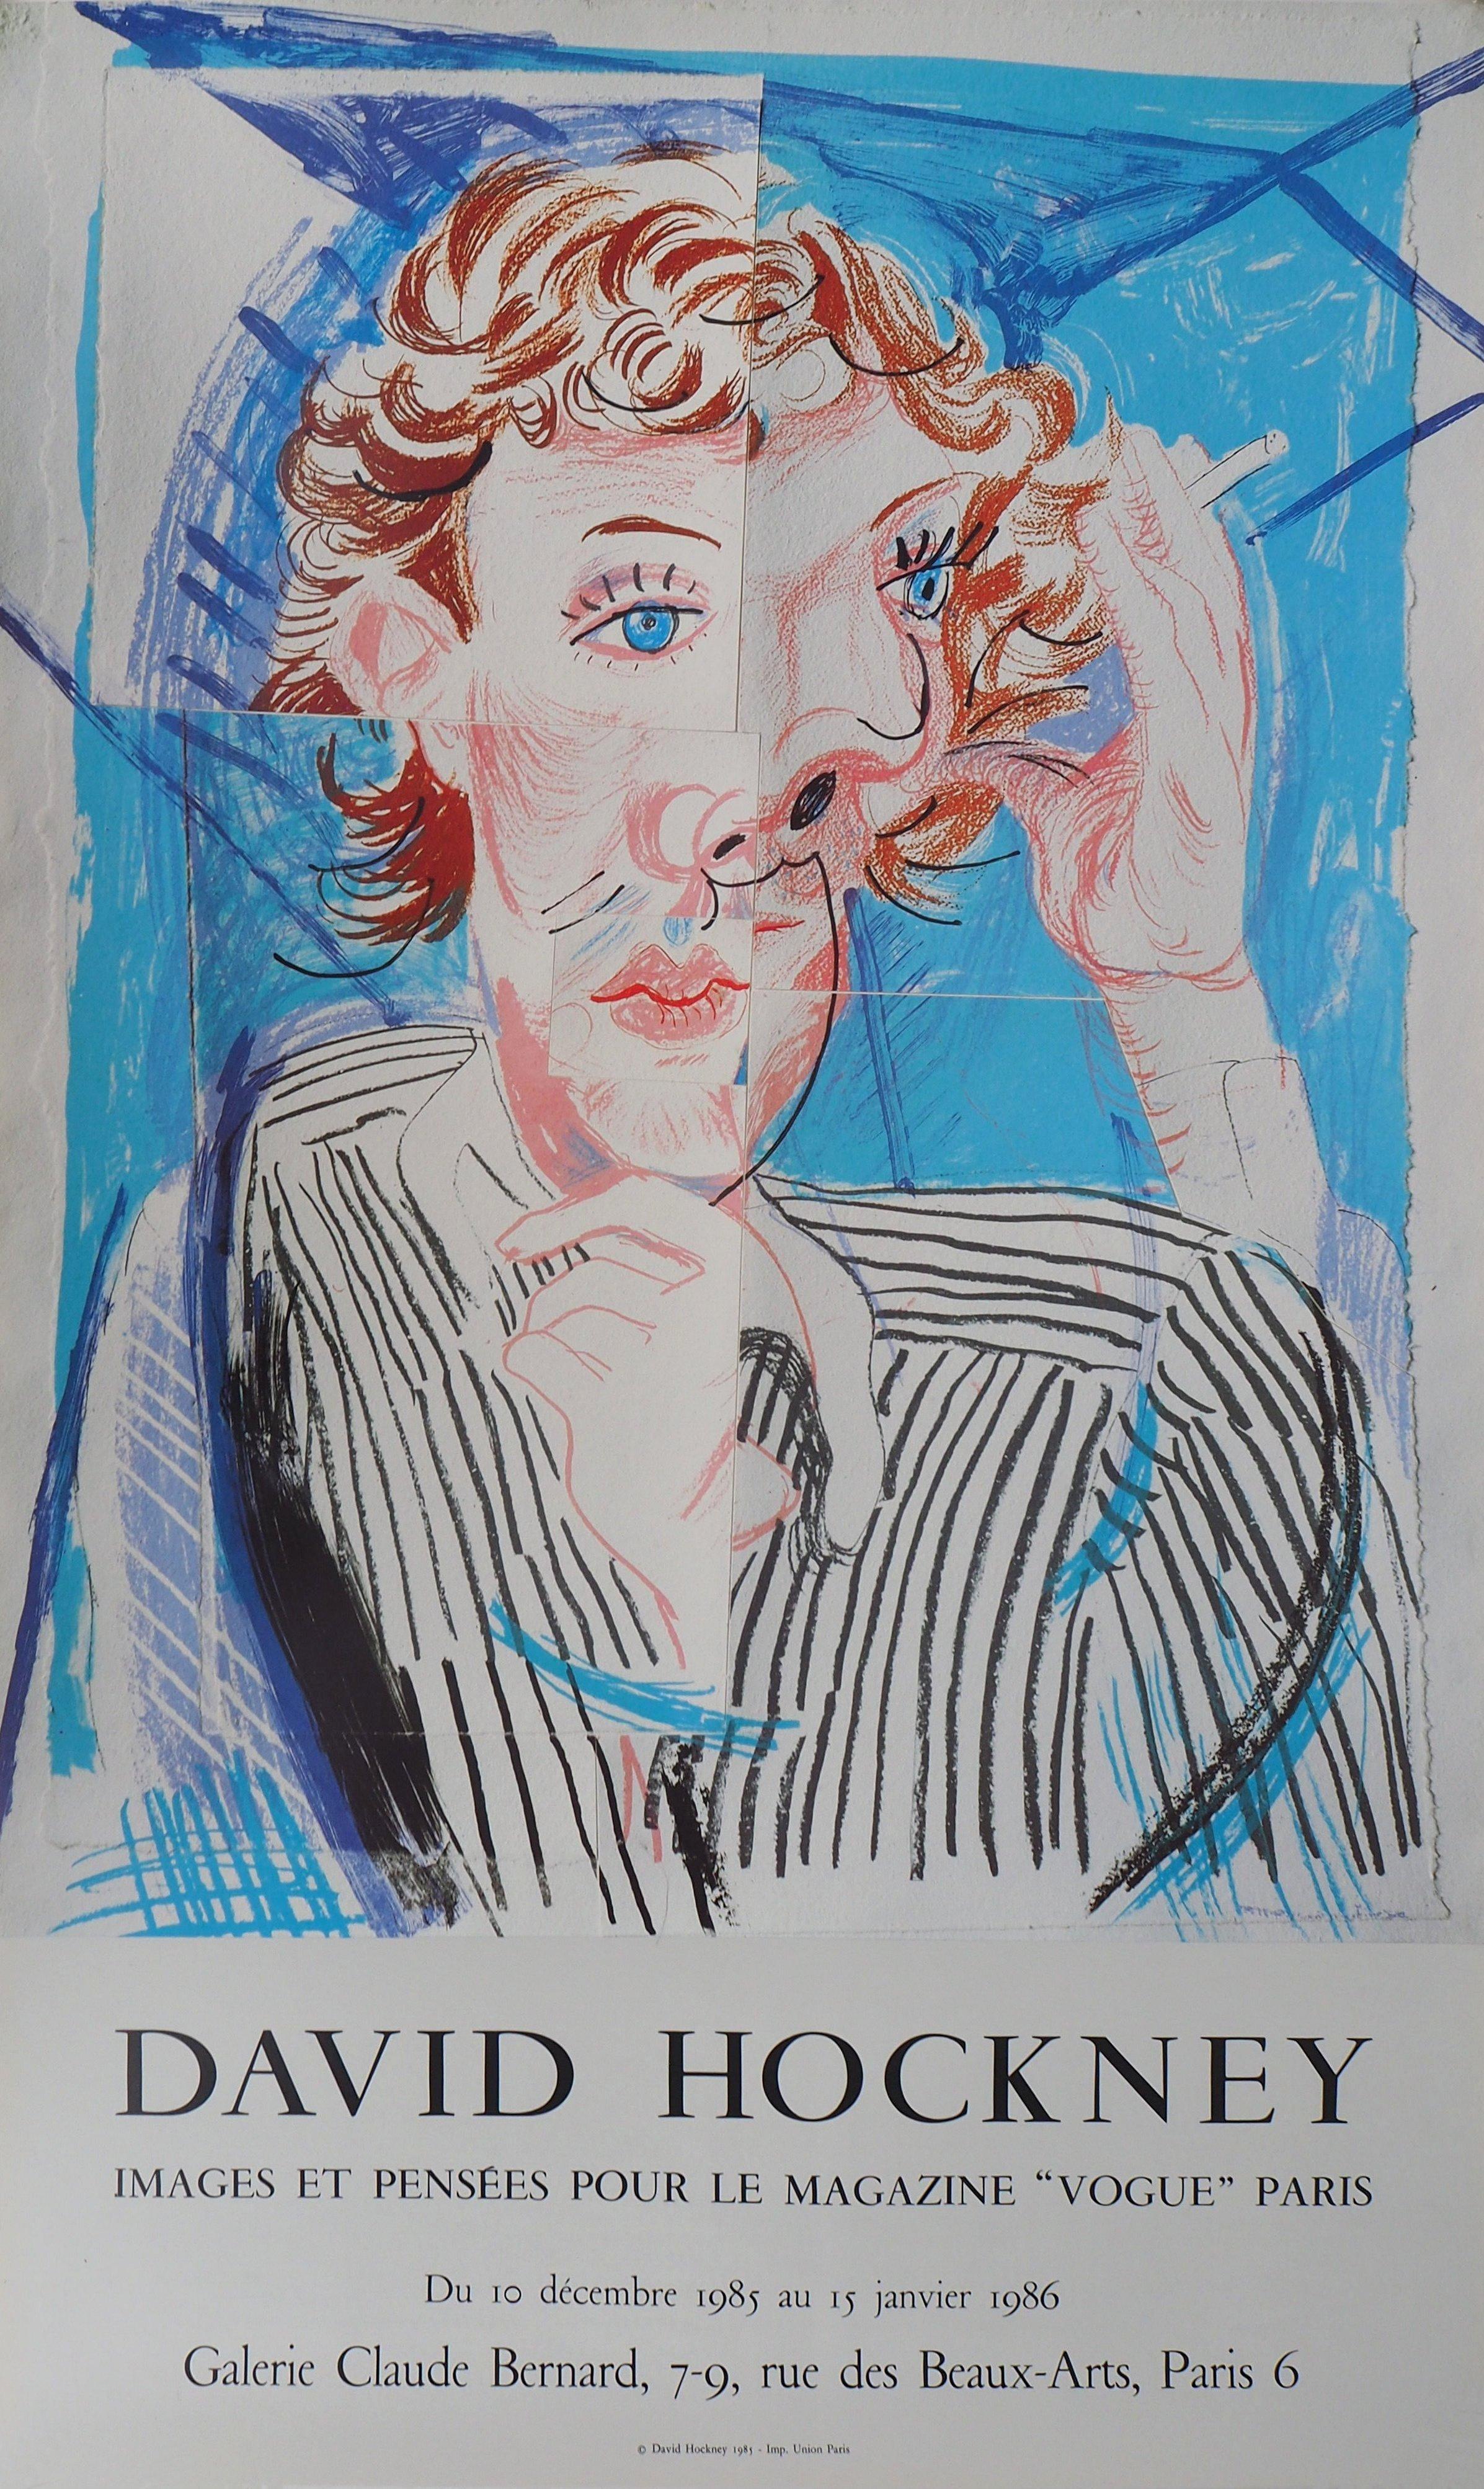 David Hockney Portrait Print - Cubist Portrait : Vogue - Original Vintage Poster (1985)